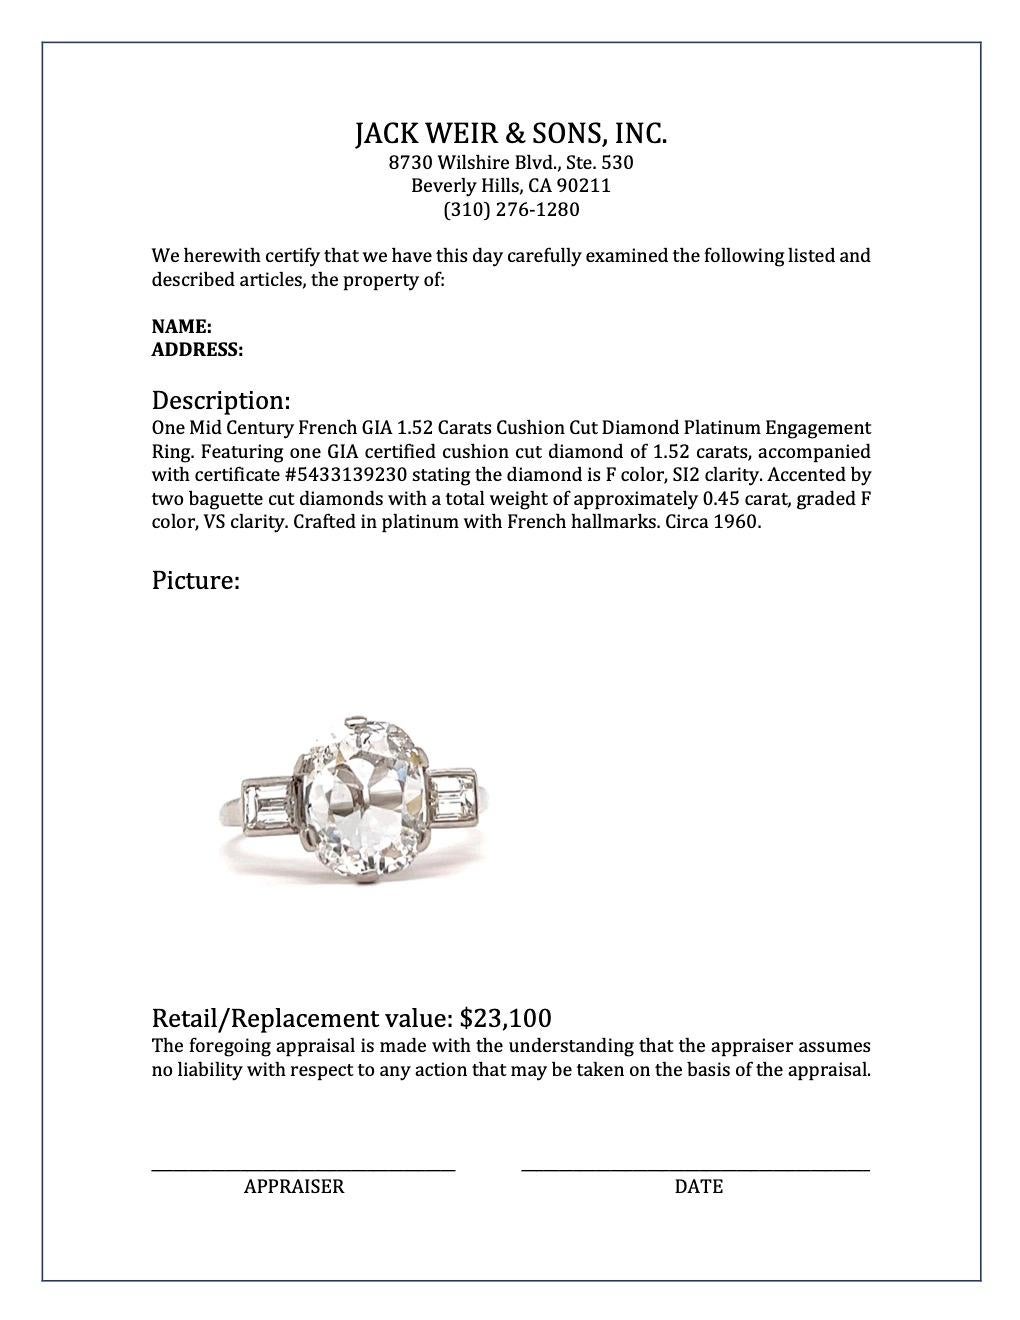 Mid-Century French GIA 1.52 Carats Cushion Cut Diamond Platinum Engagement Ring 1